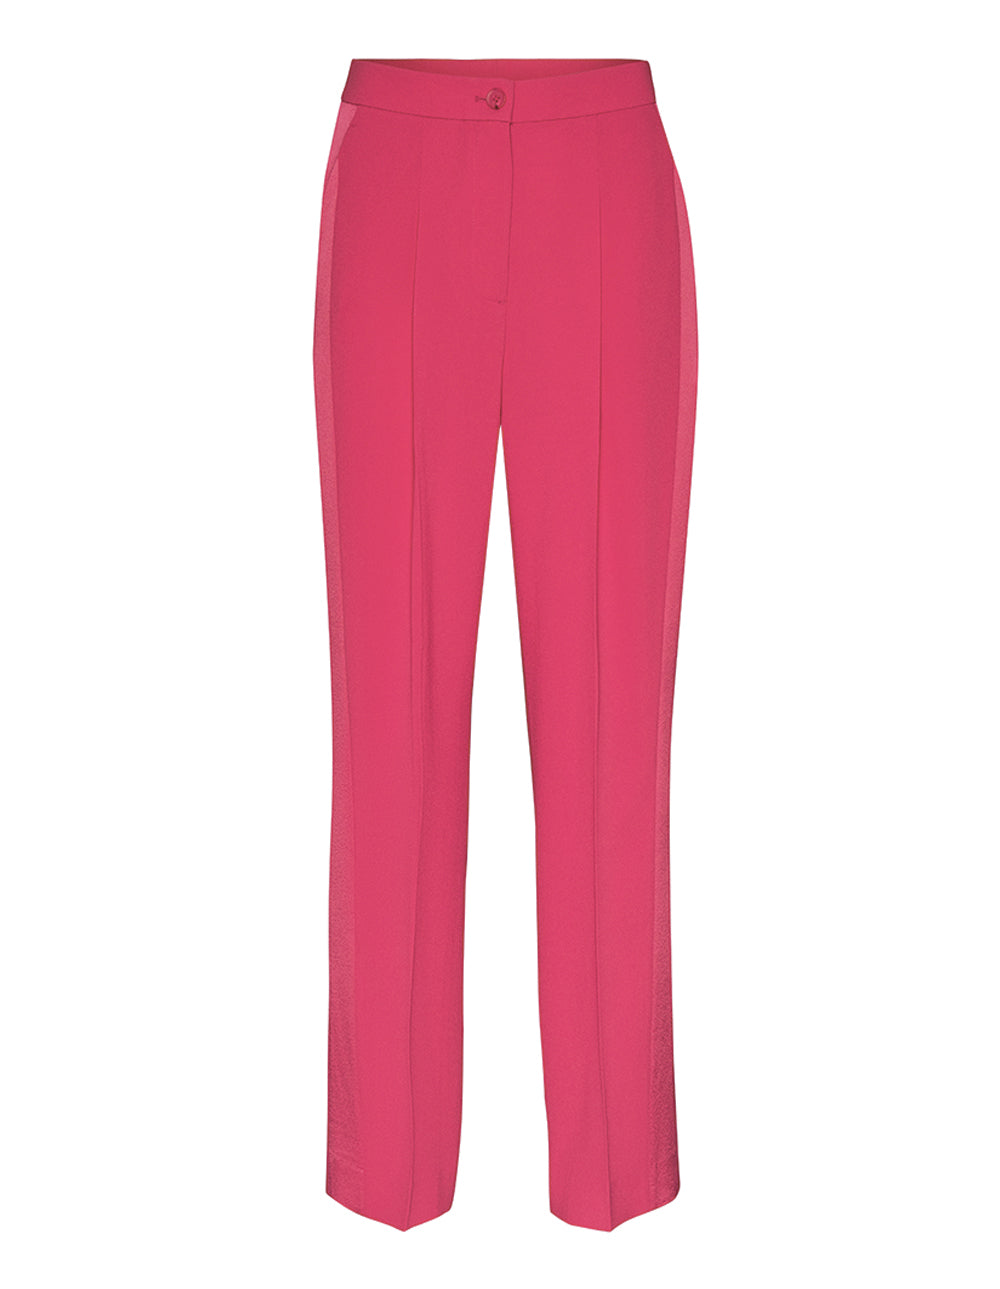 Club21 Collection Satin Back Crepe Pants (Pink)